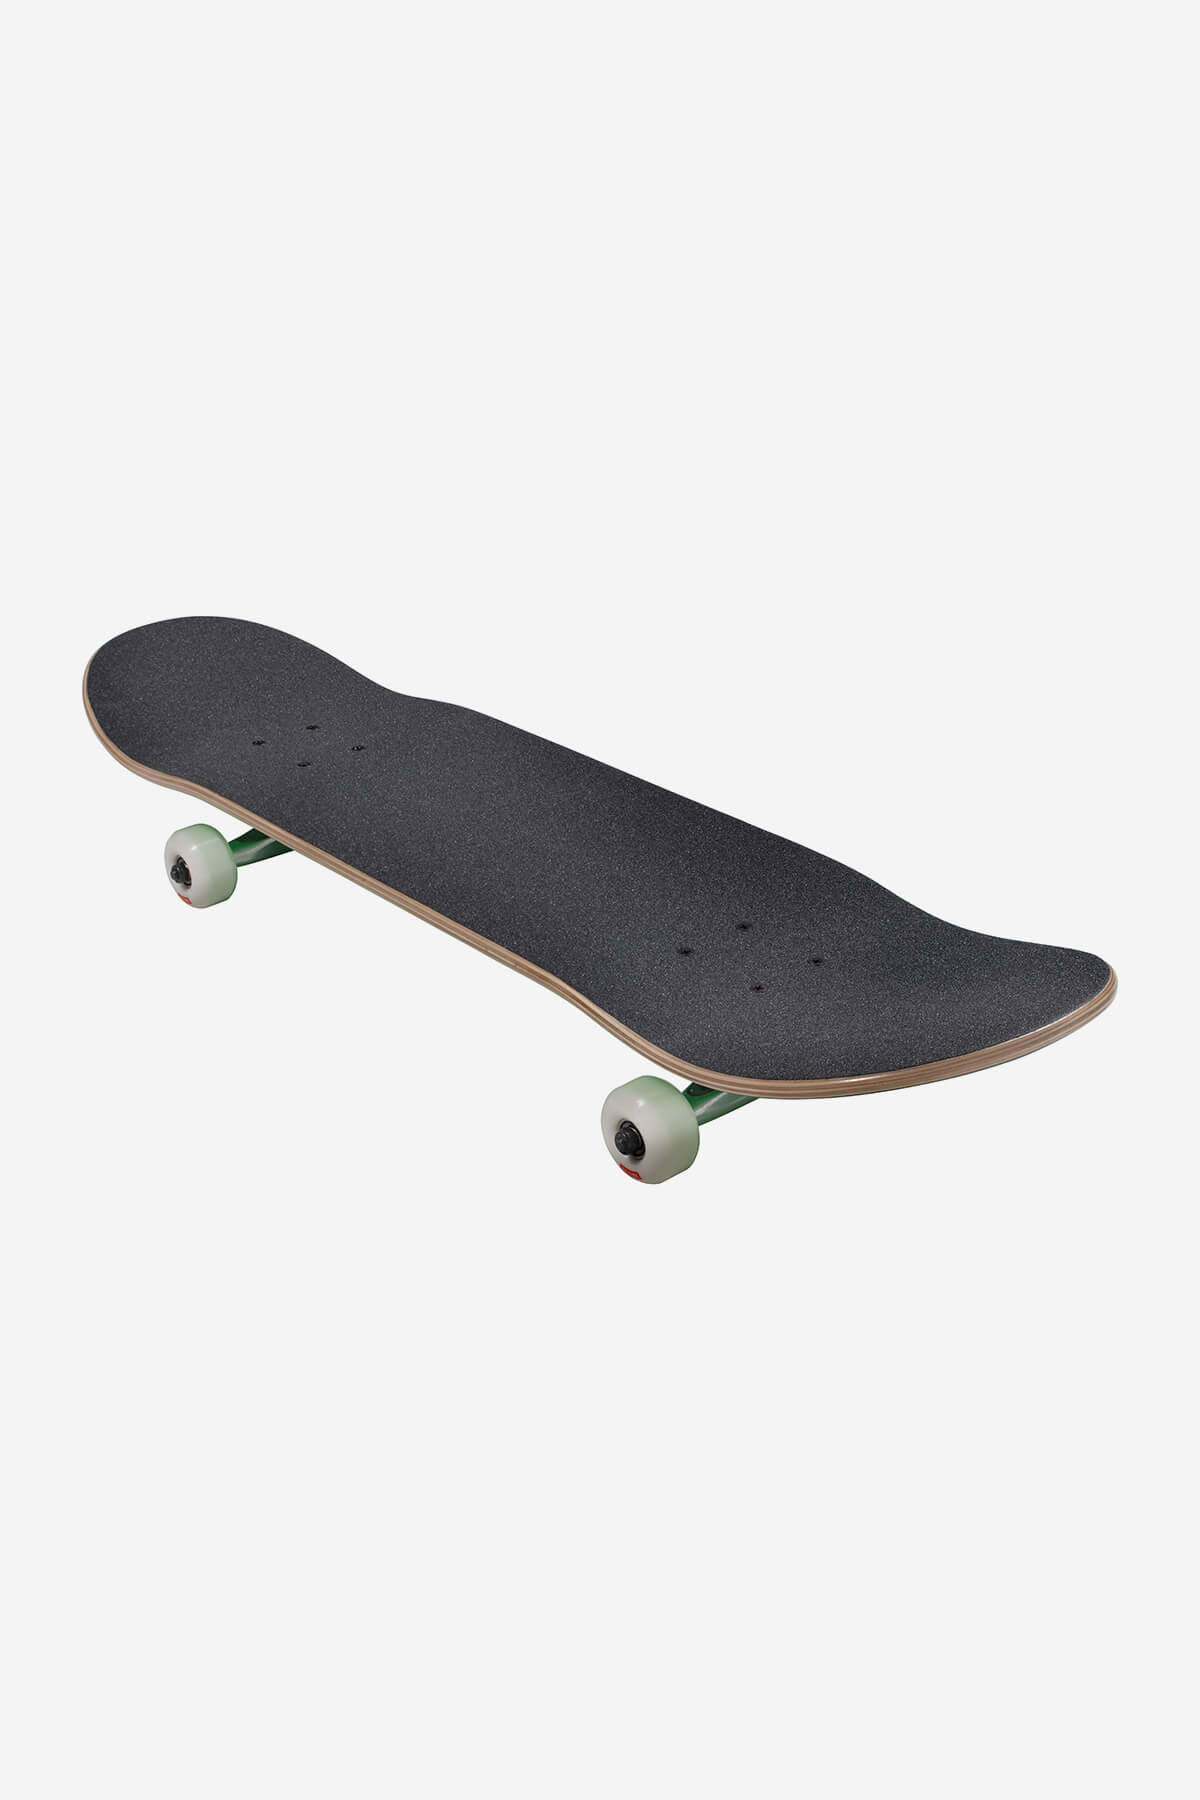 Globe - Goodstock - Neon Green - 8.0" complet Skateboard